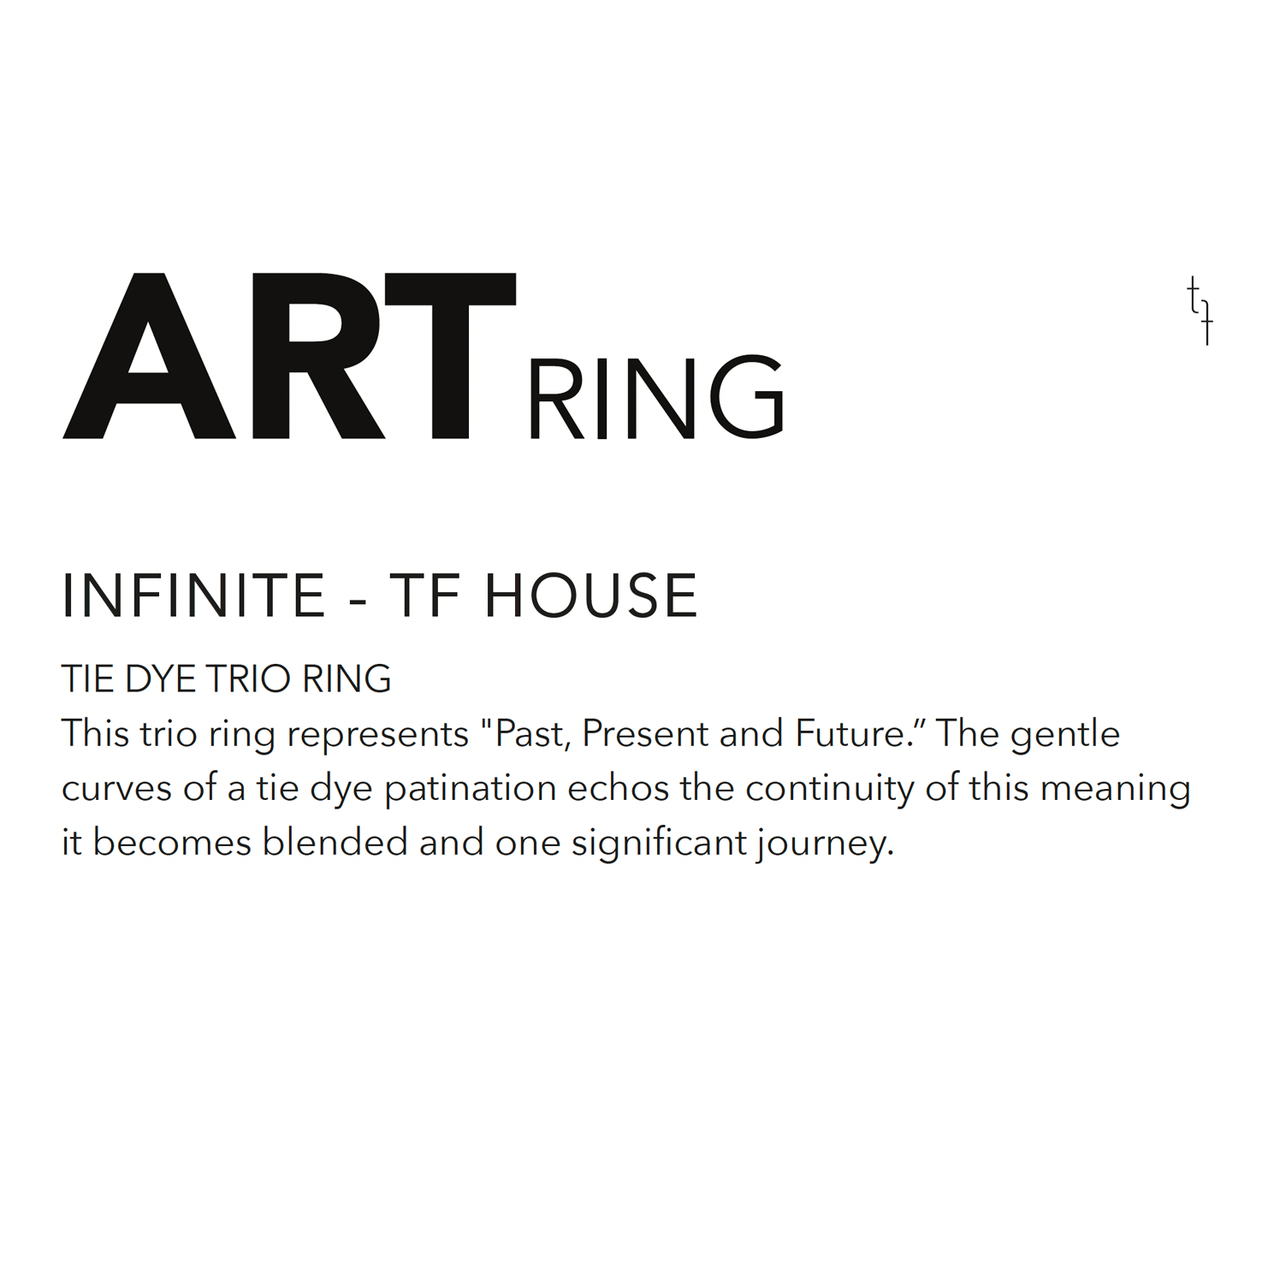 Tie Dye Trio Art Ring, tf House - Infinite, tomfoolery London, Art Ring 2023 exhibition